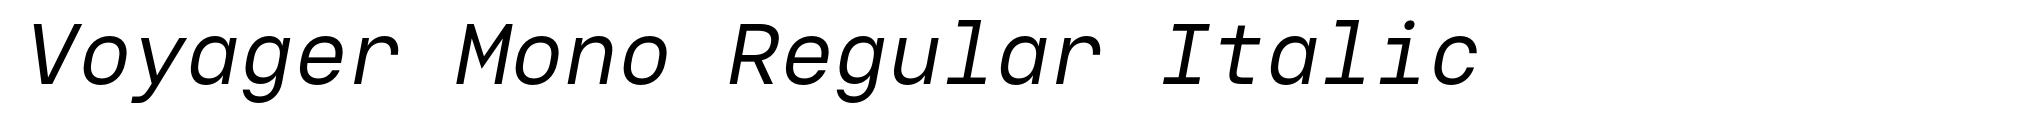 Voyager Mono Regular Italic image